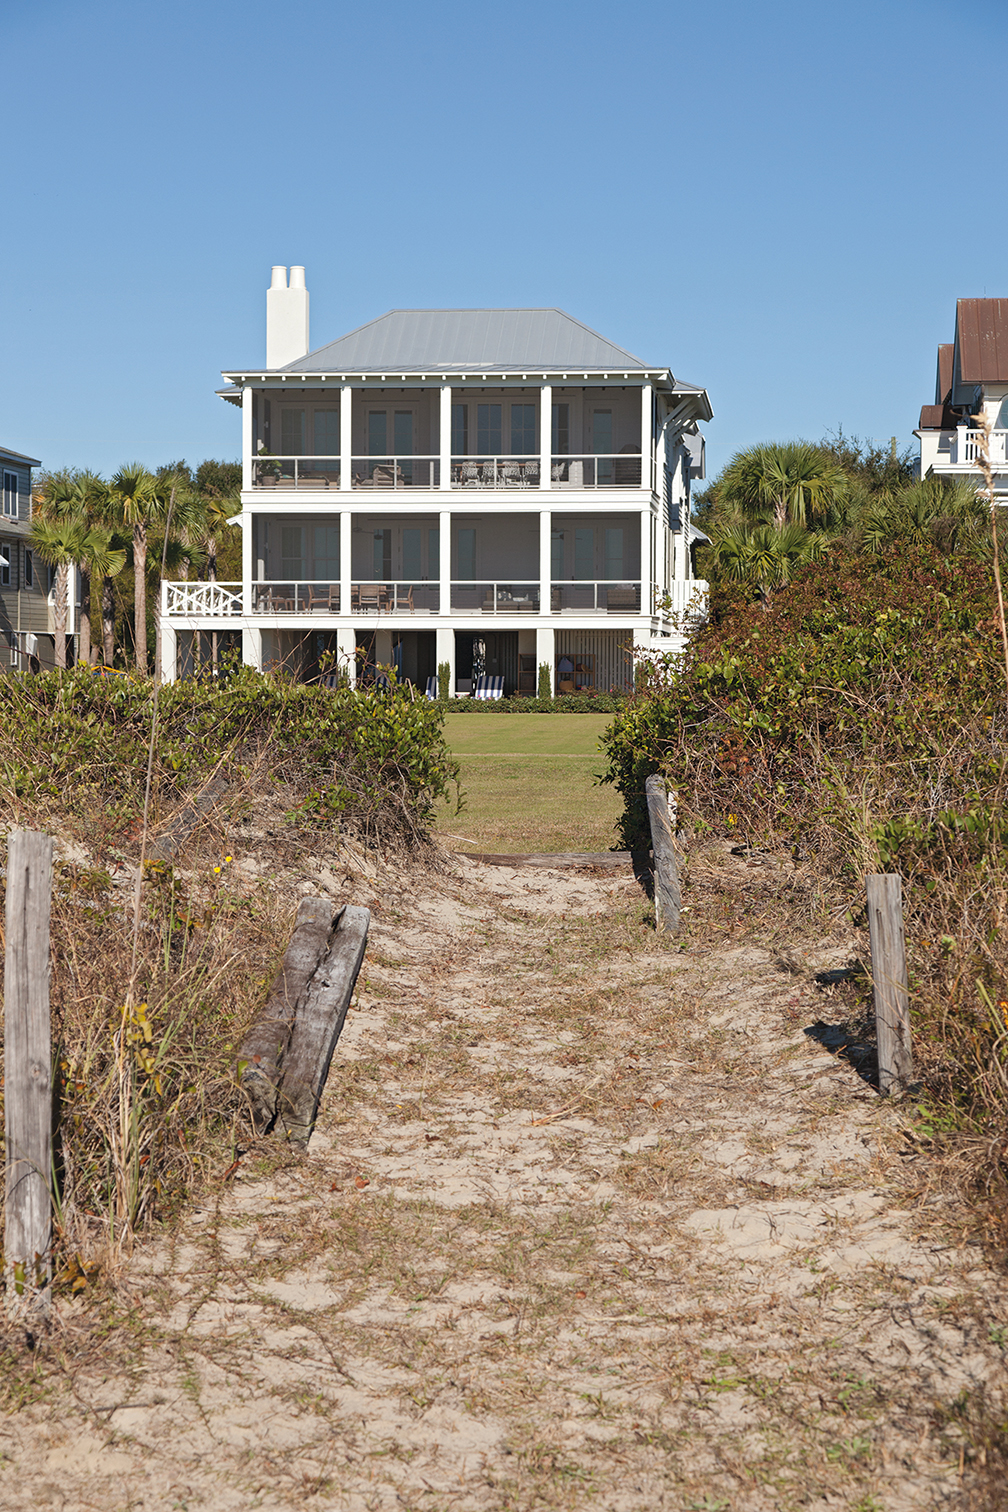 ...while the beachfront façade is a classic, porch-perfect beach house.